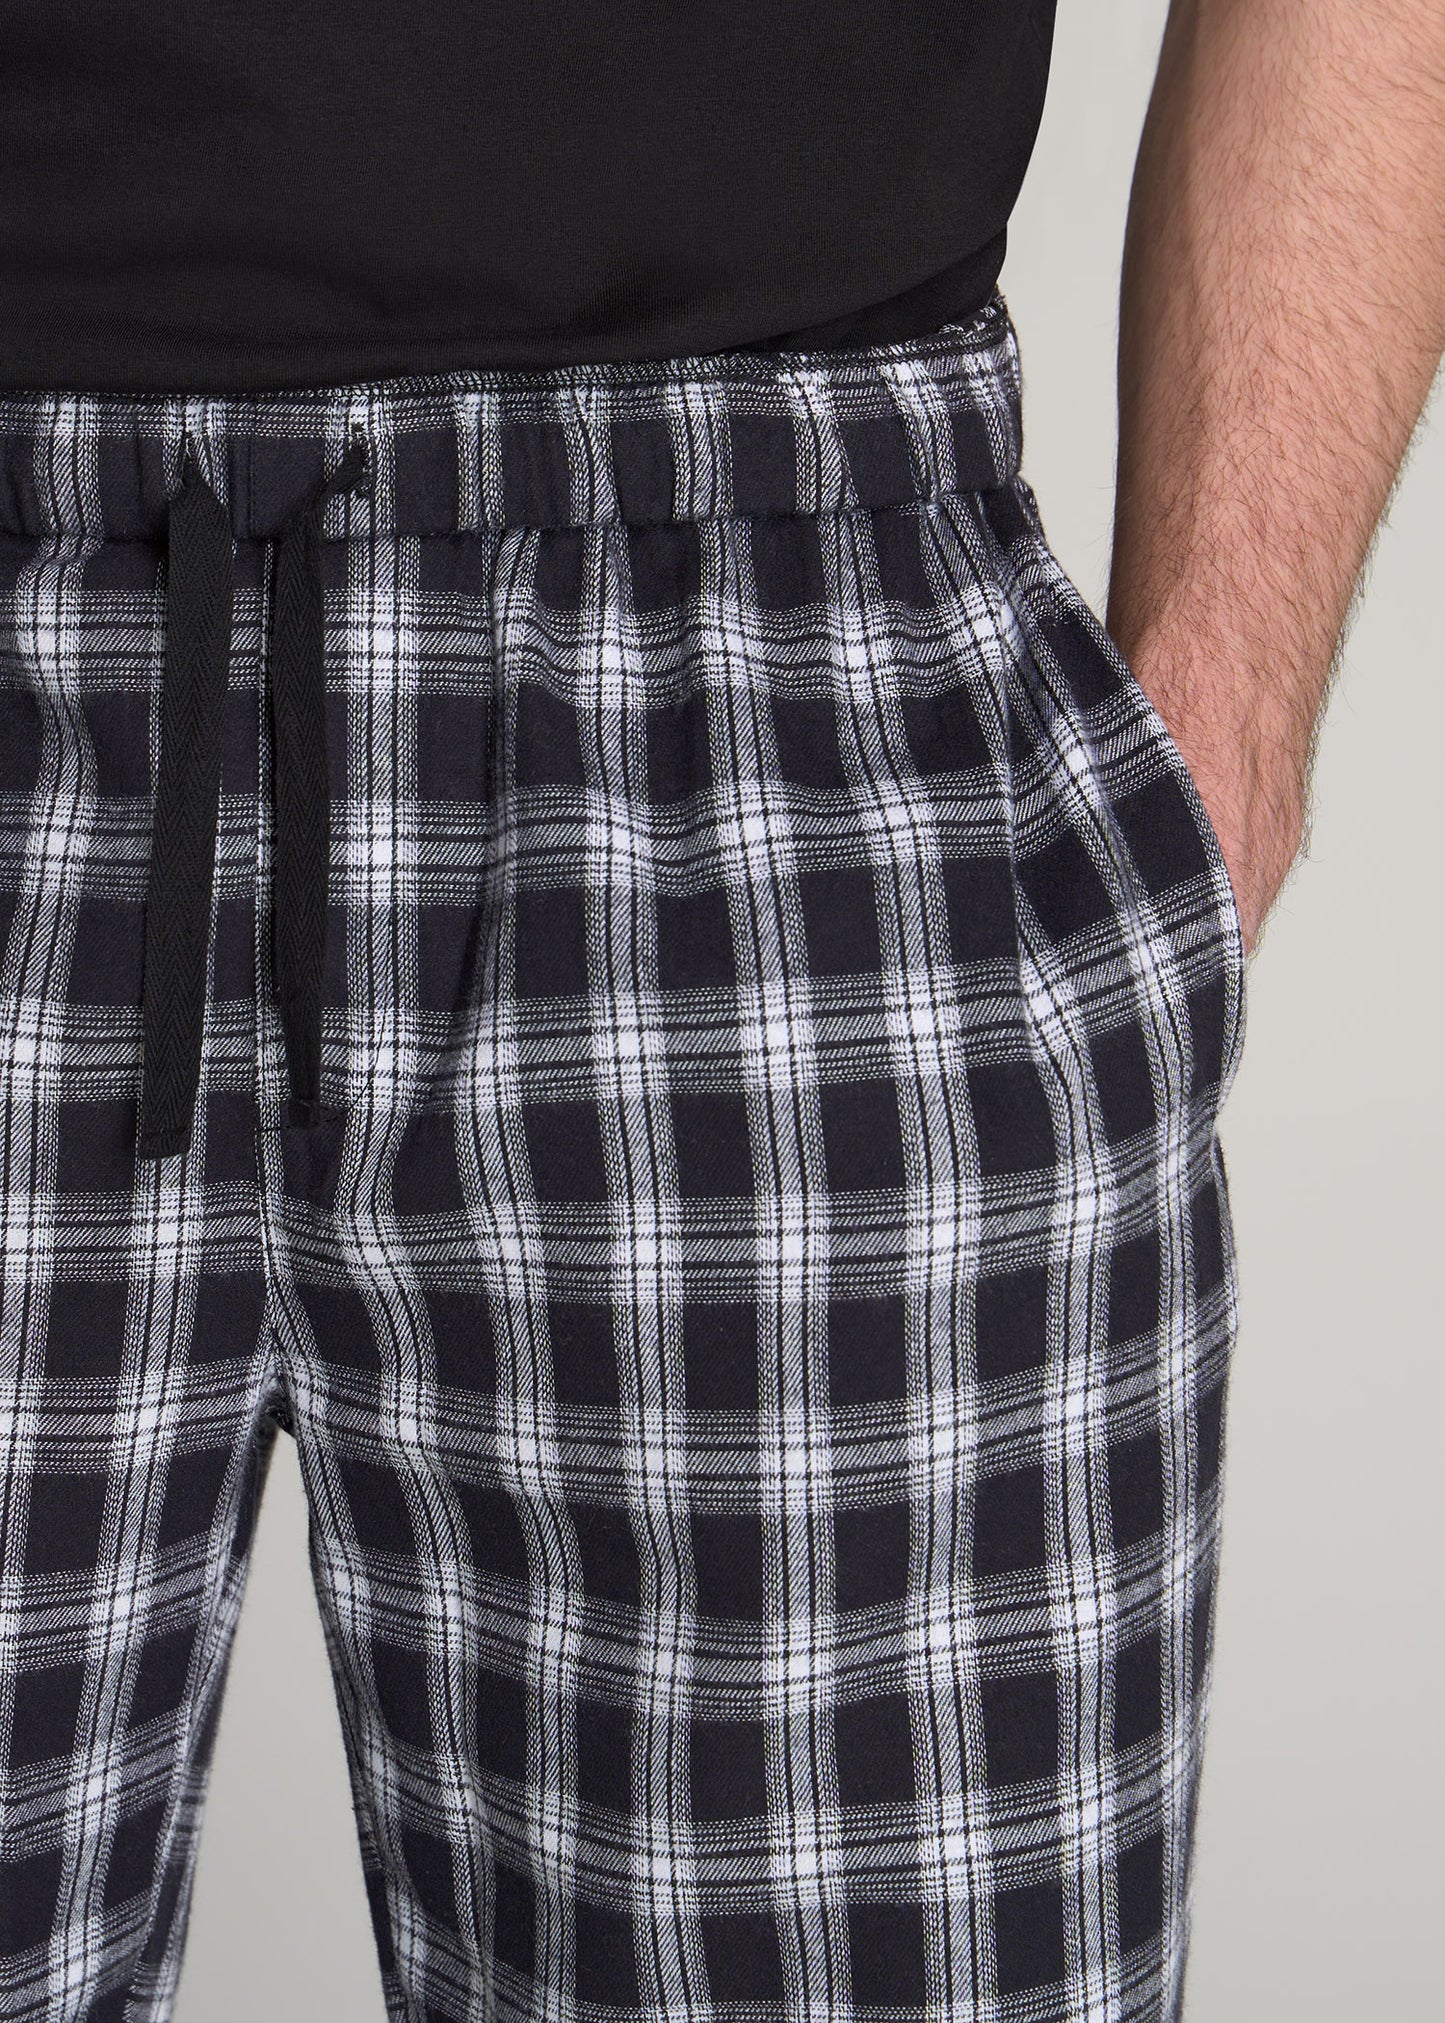 Buy Plus Size Men Pyjamas & Plus Size Men's Pyjama Pants - Apella